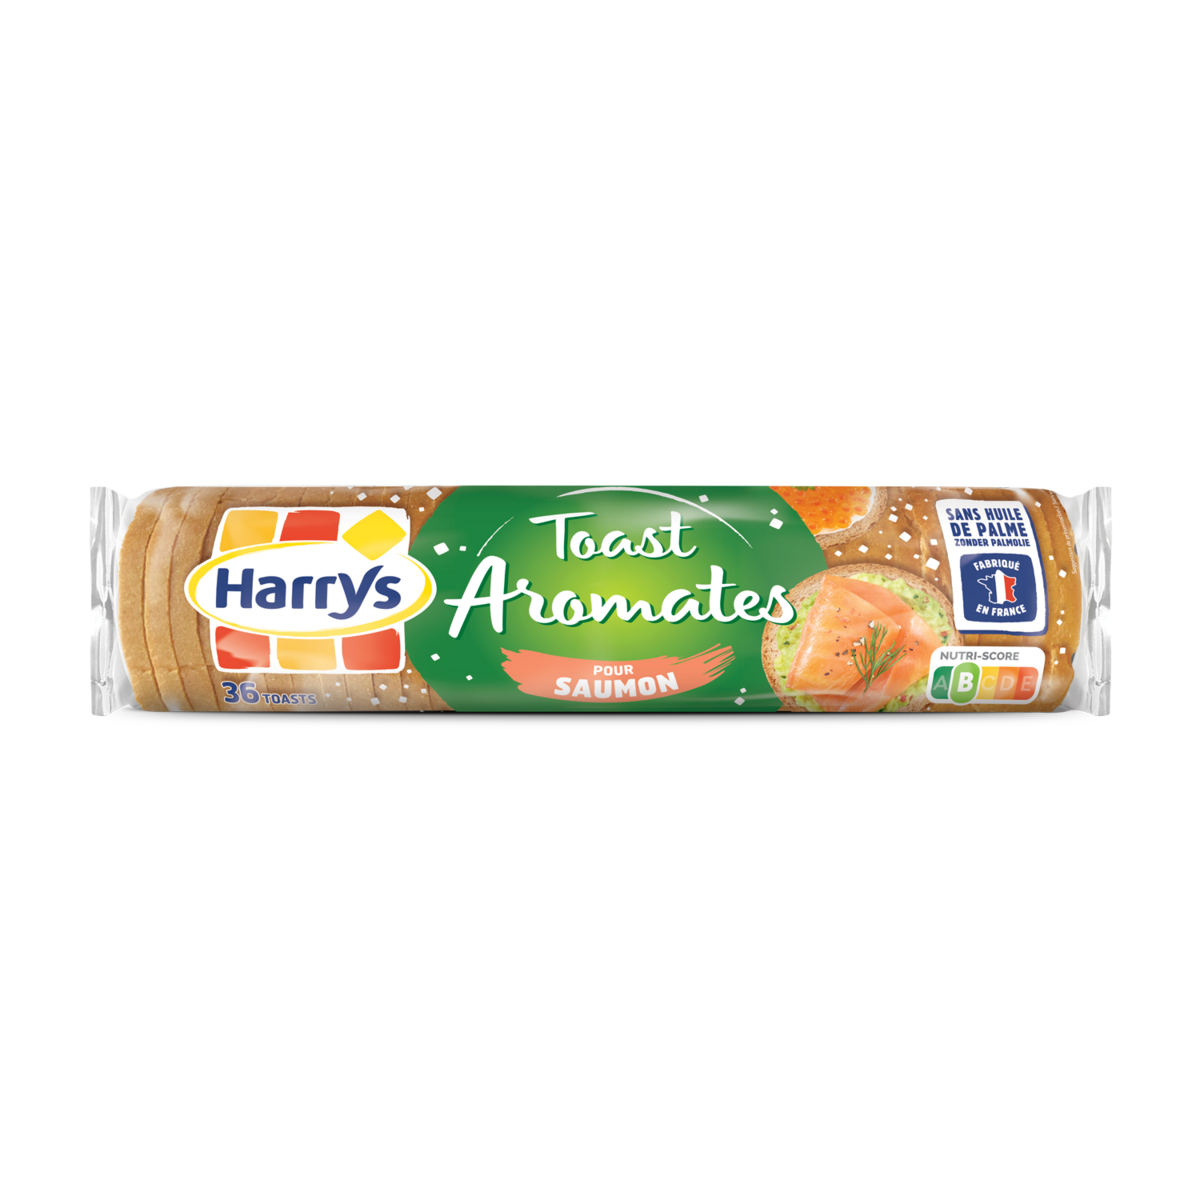 HARRYS Toasts aux aromates pour saumon 36 toasts 280g